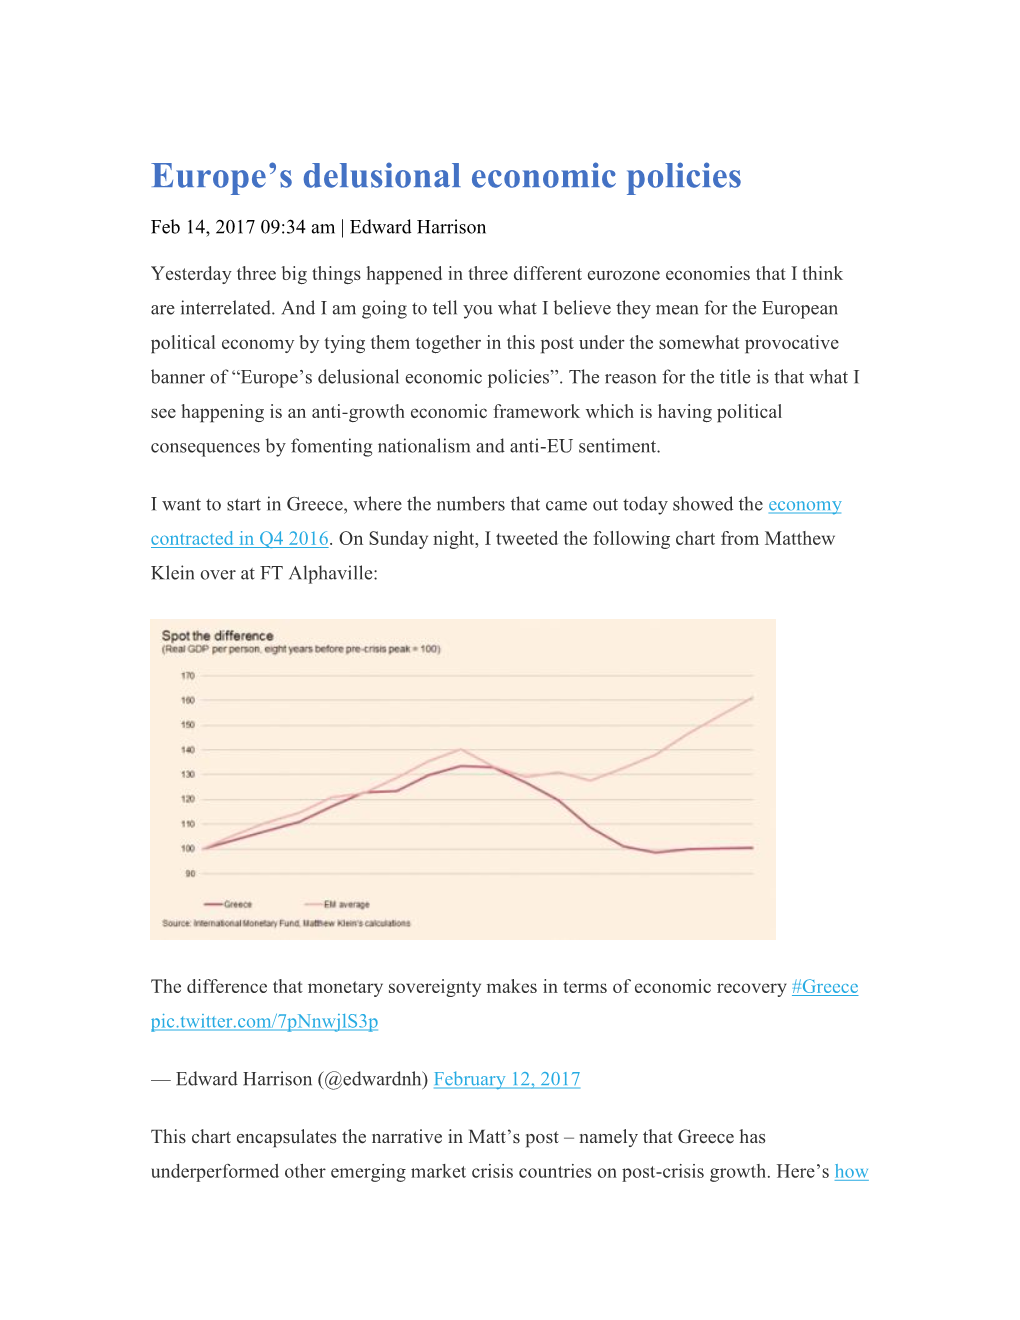 Europe's Delusional Economic Policies